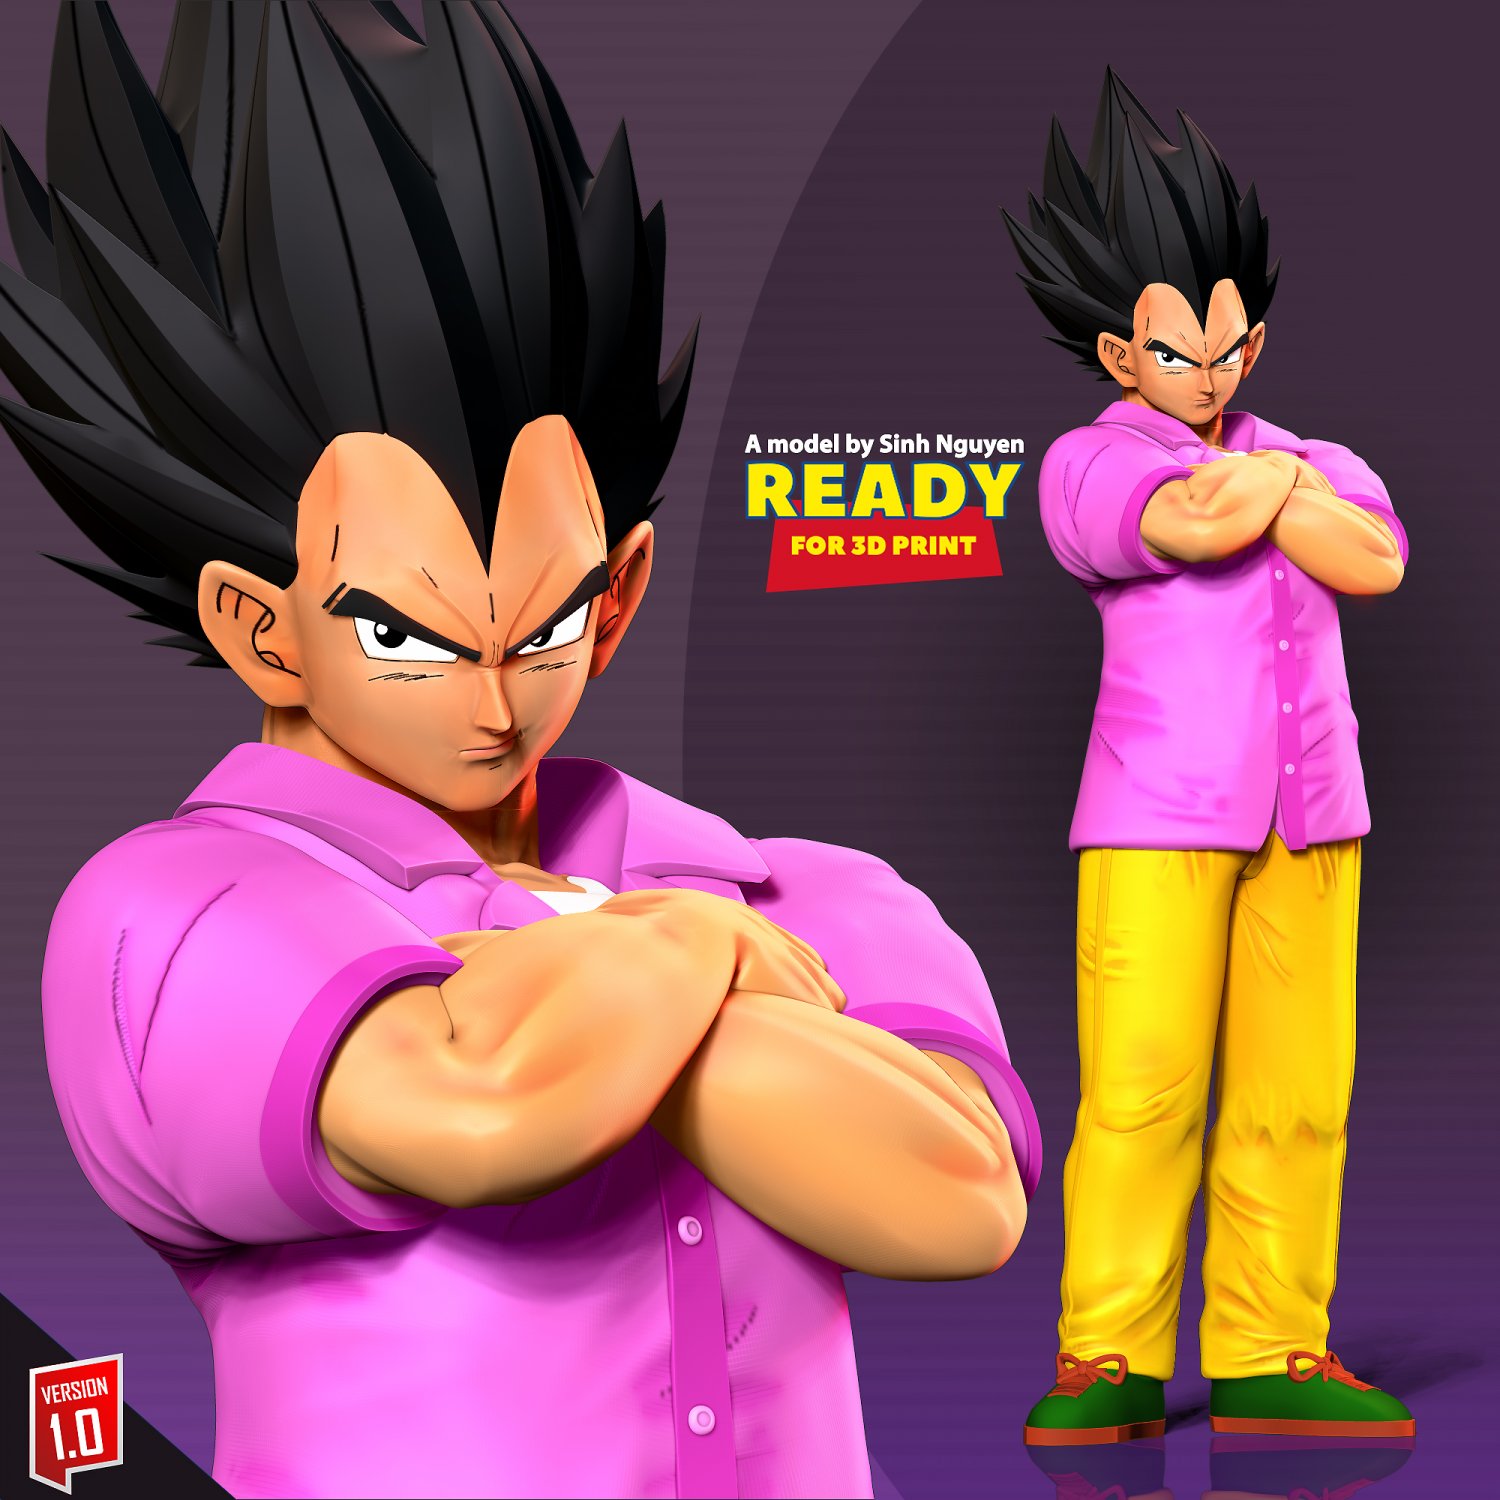 Dragon Ball Z Personagens Anime Goku/broly/vegeta/gogeta Modelo